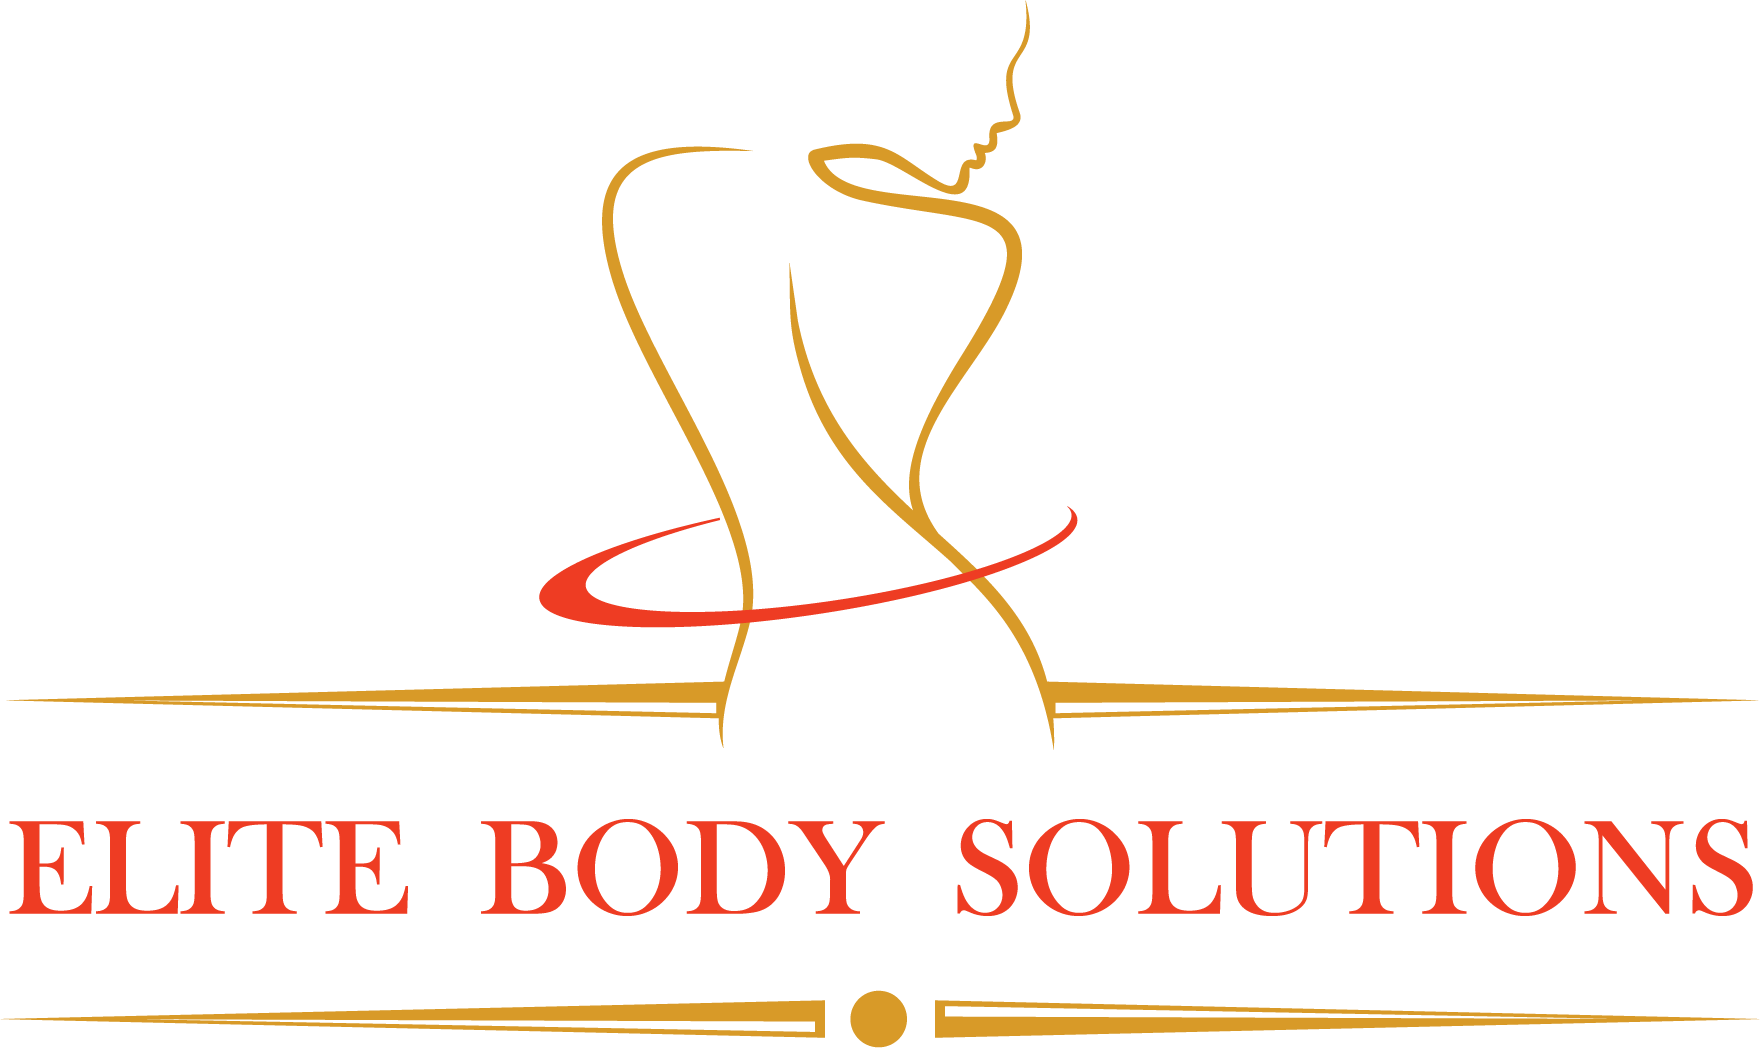 The body solution logo